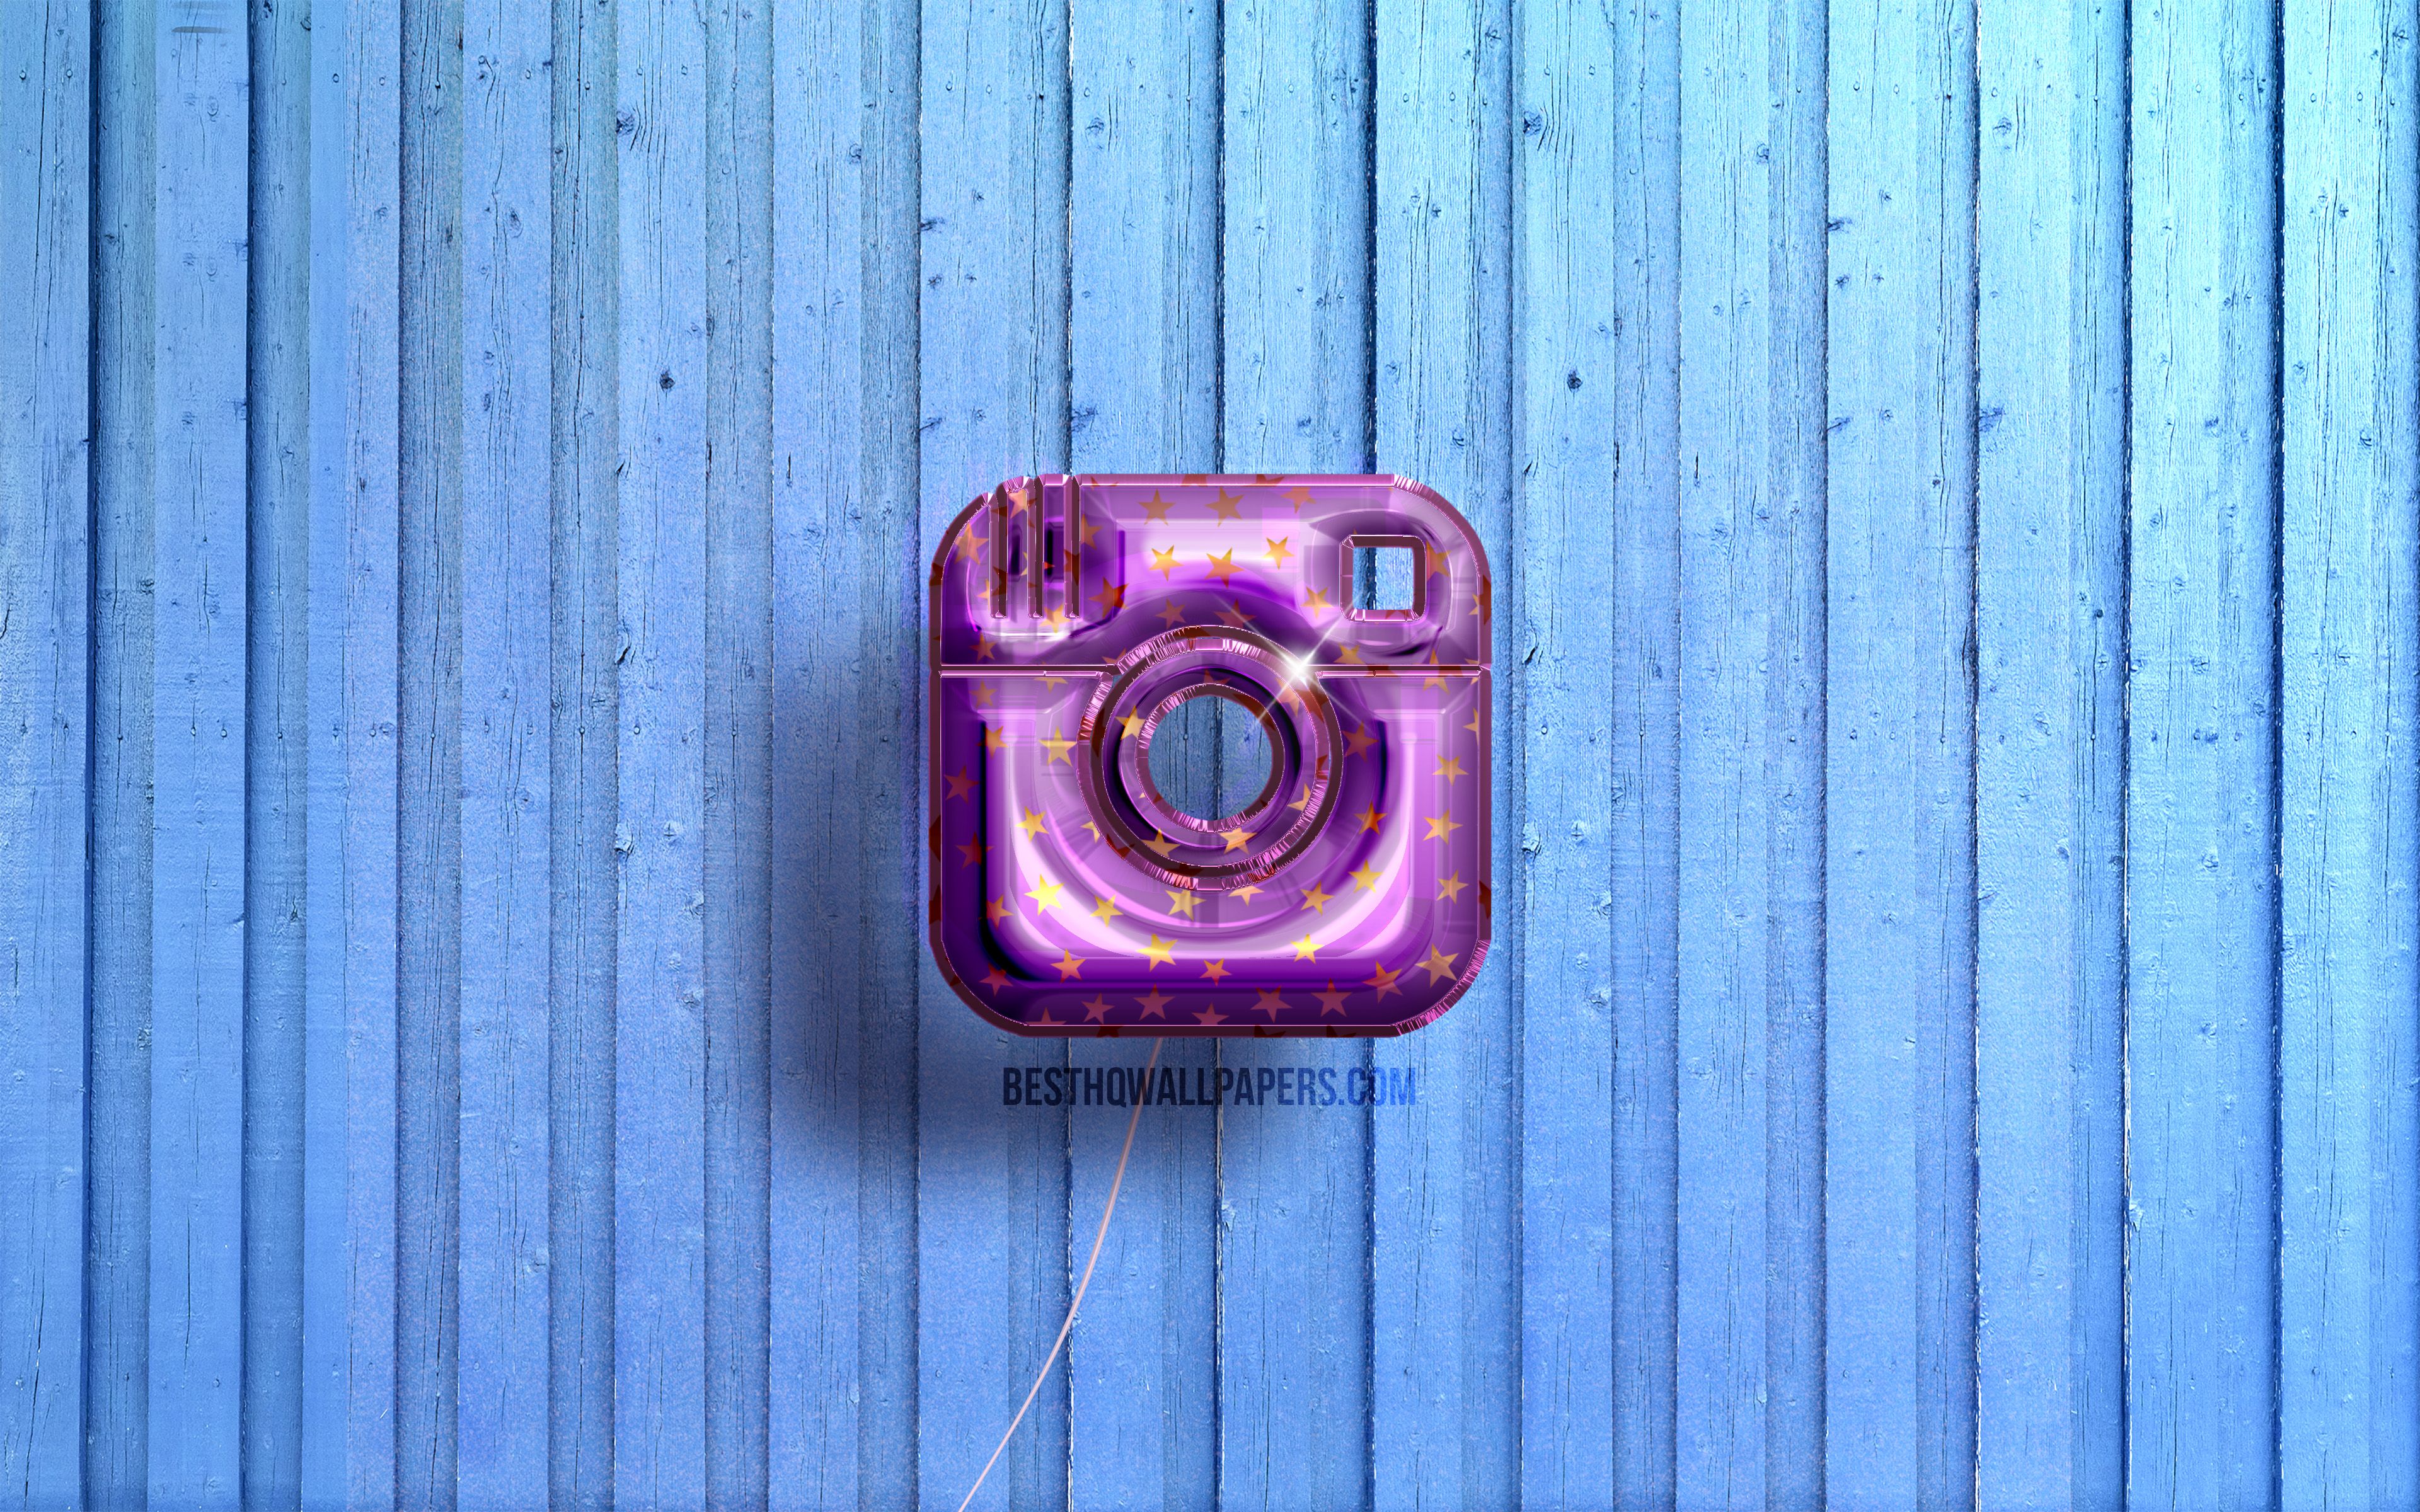 Download wallpaper 4k, Instagram logo, violet realistic balloons, social network, Instagram 3D logo, blue wooden background, Instagram for desktop with resolution 3840x2400. High Quality HD picture wallpaper